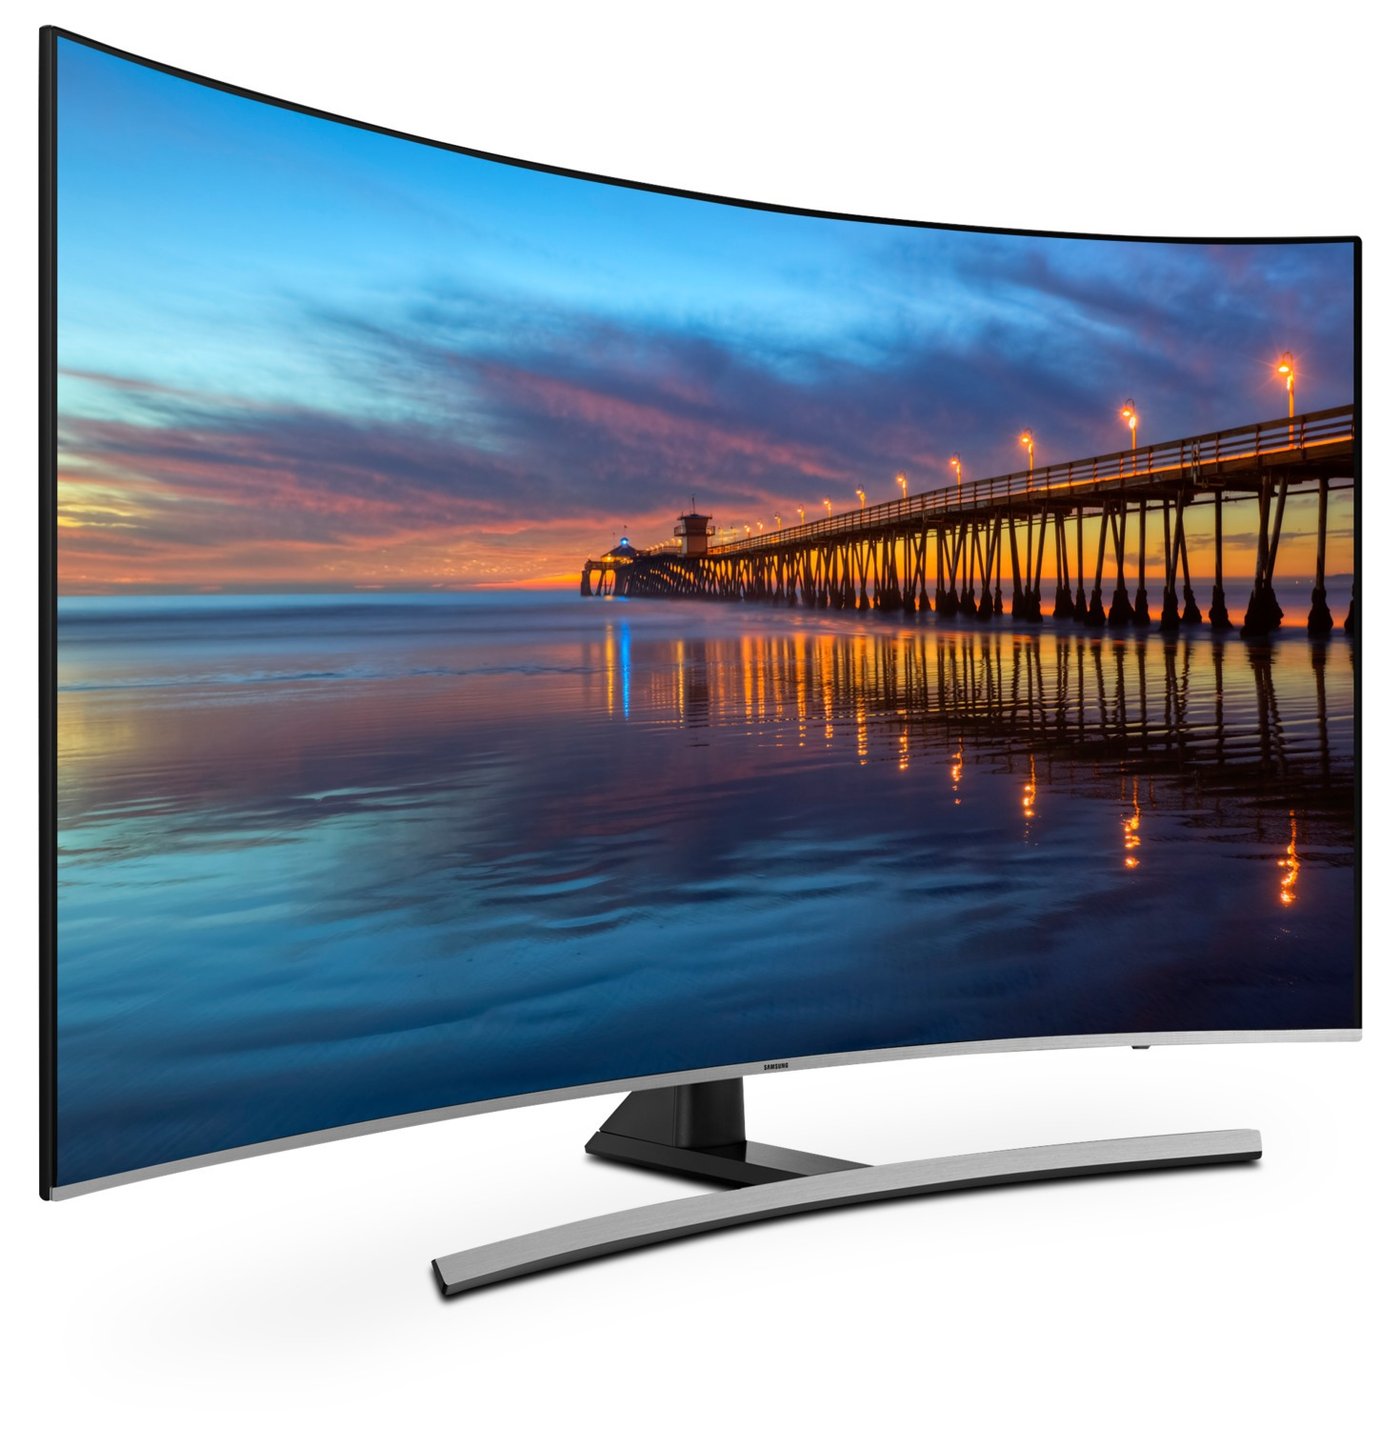 Купить телевизор в махачкале. Samsung 55ku6670. Samsung led 55. Телевизор самсунг (цена и функции). ТВ самсунг 138.